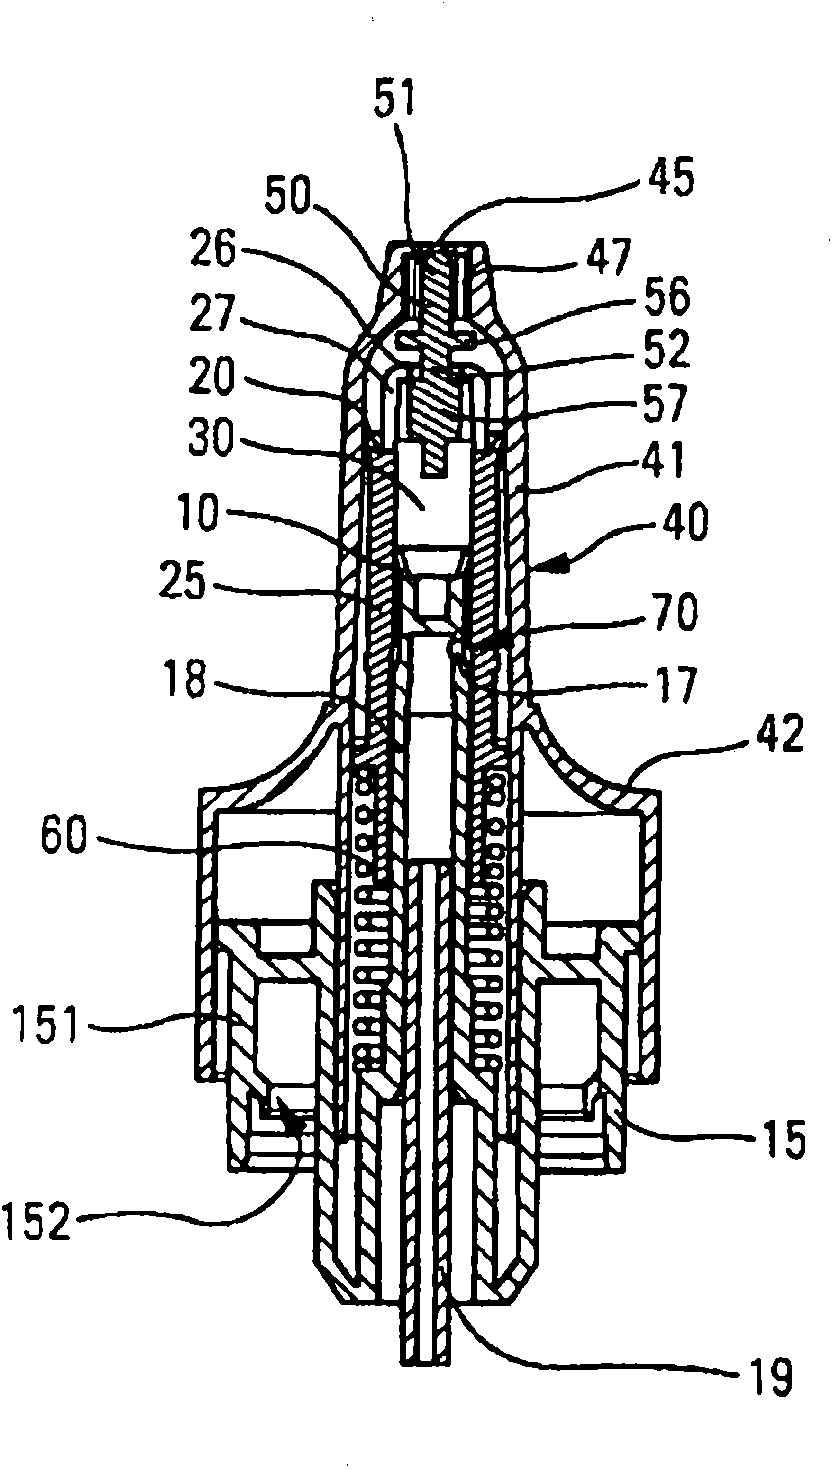 Pump for dispensing a fluid material